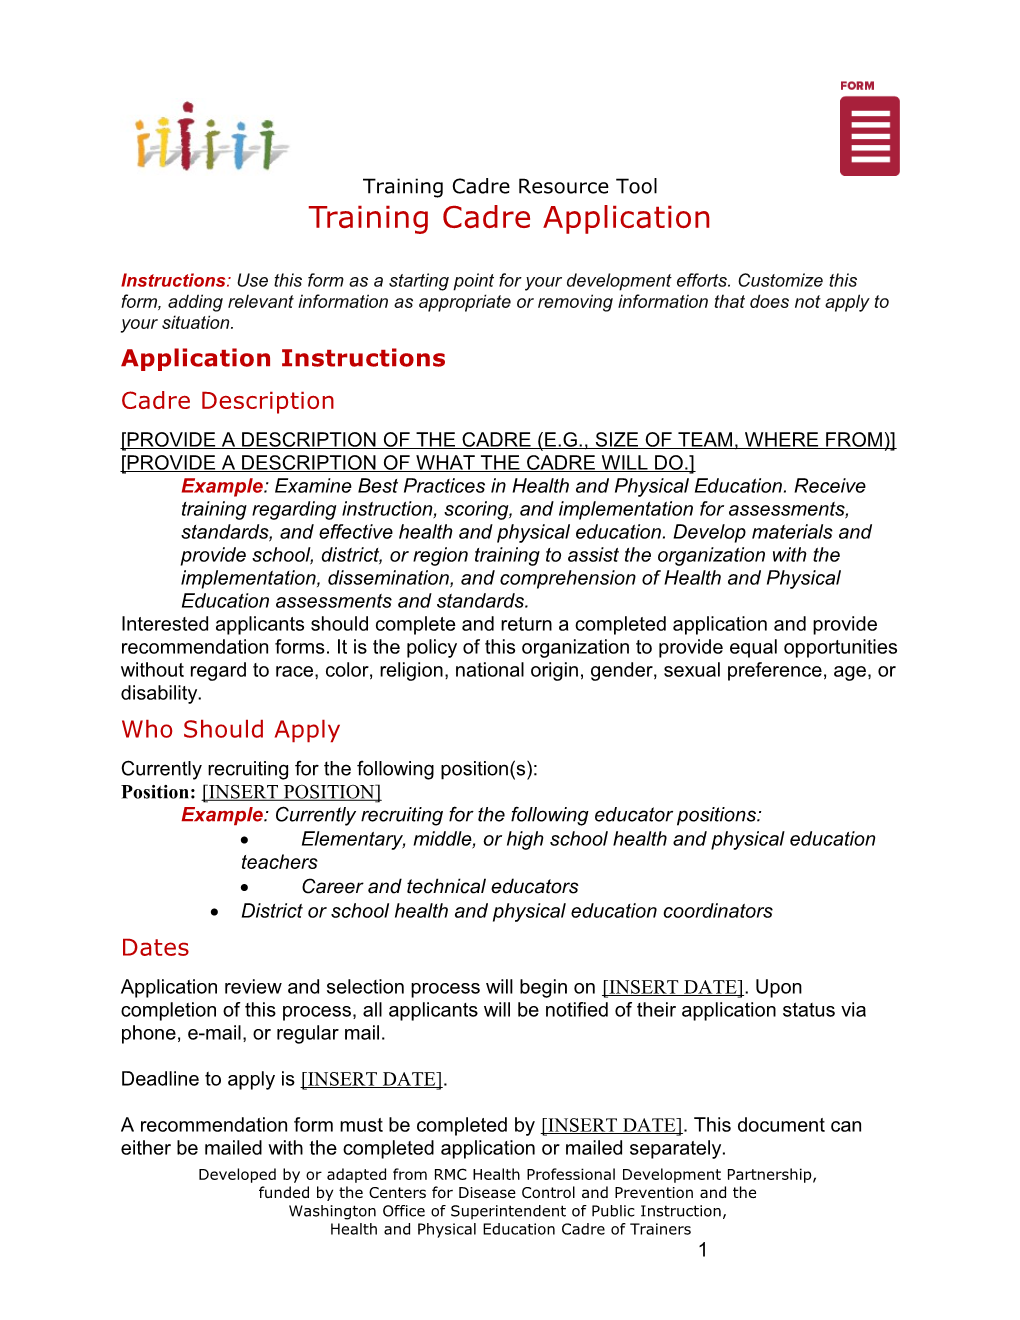 Training Cadre Application